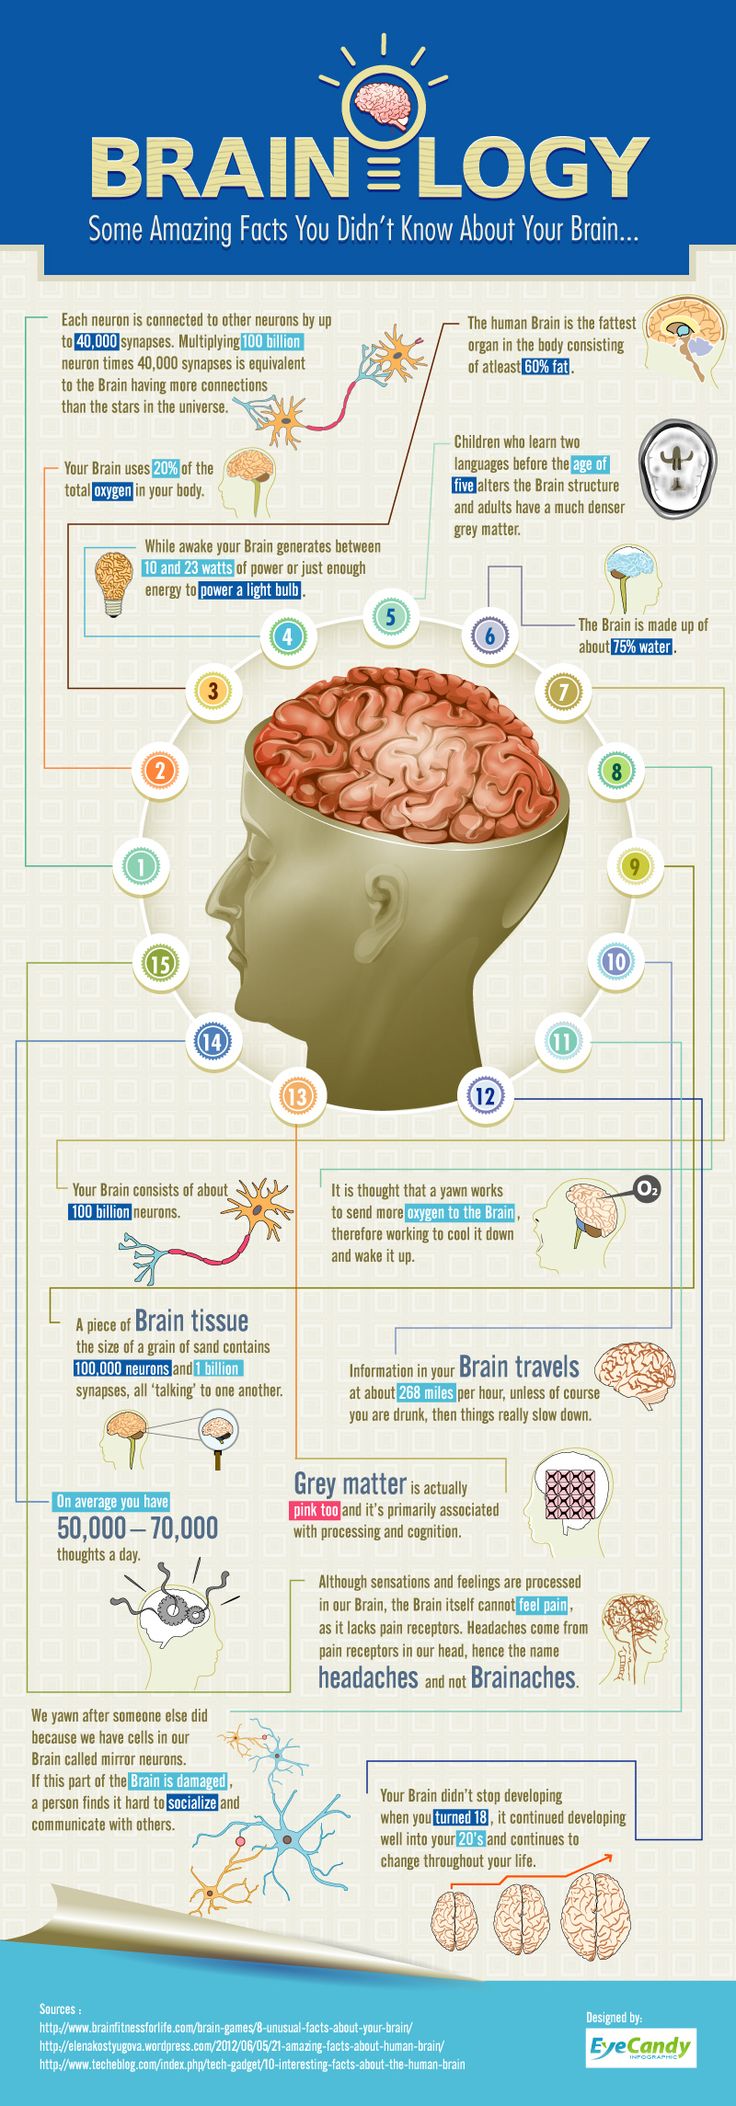 15-brain-amazing-facts